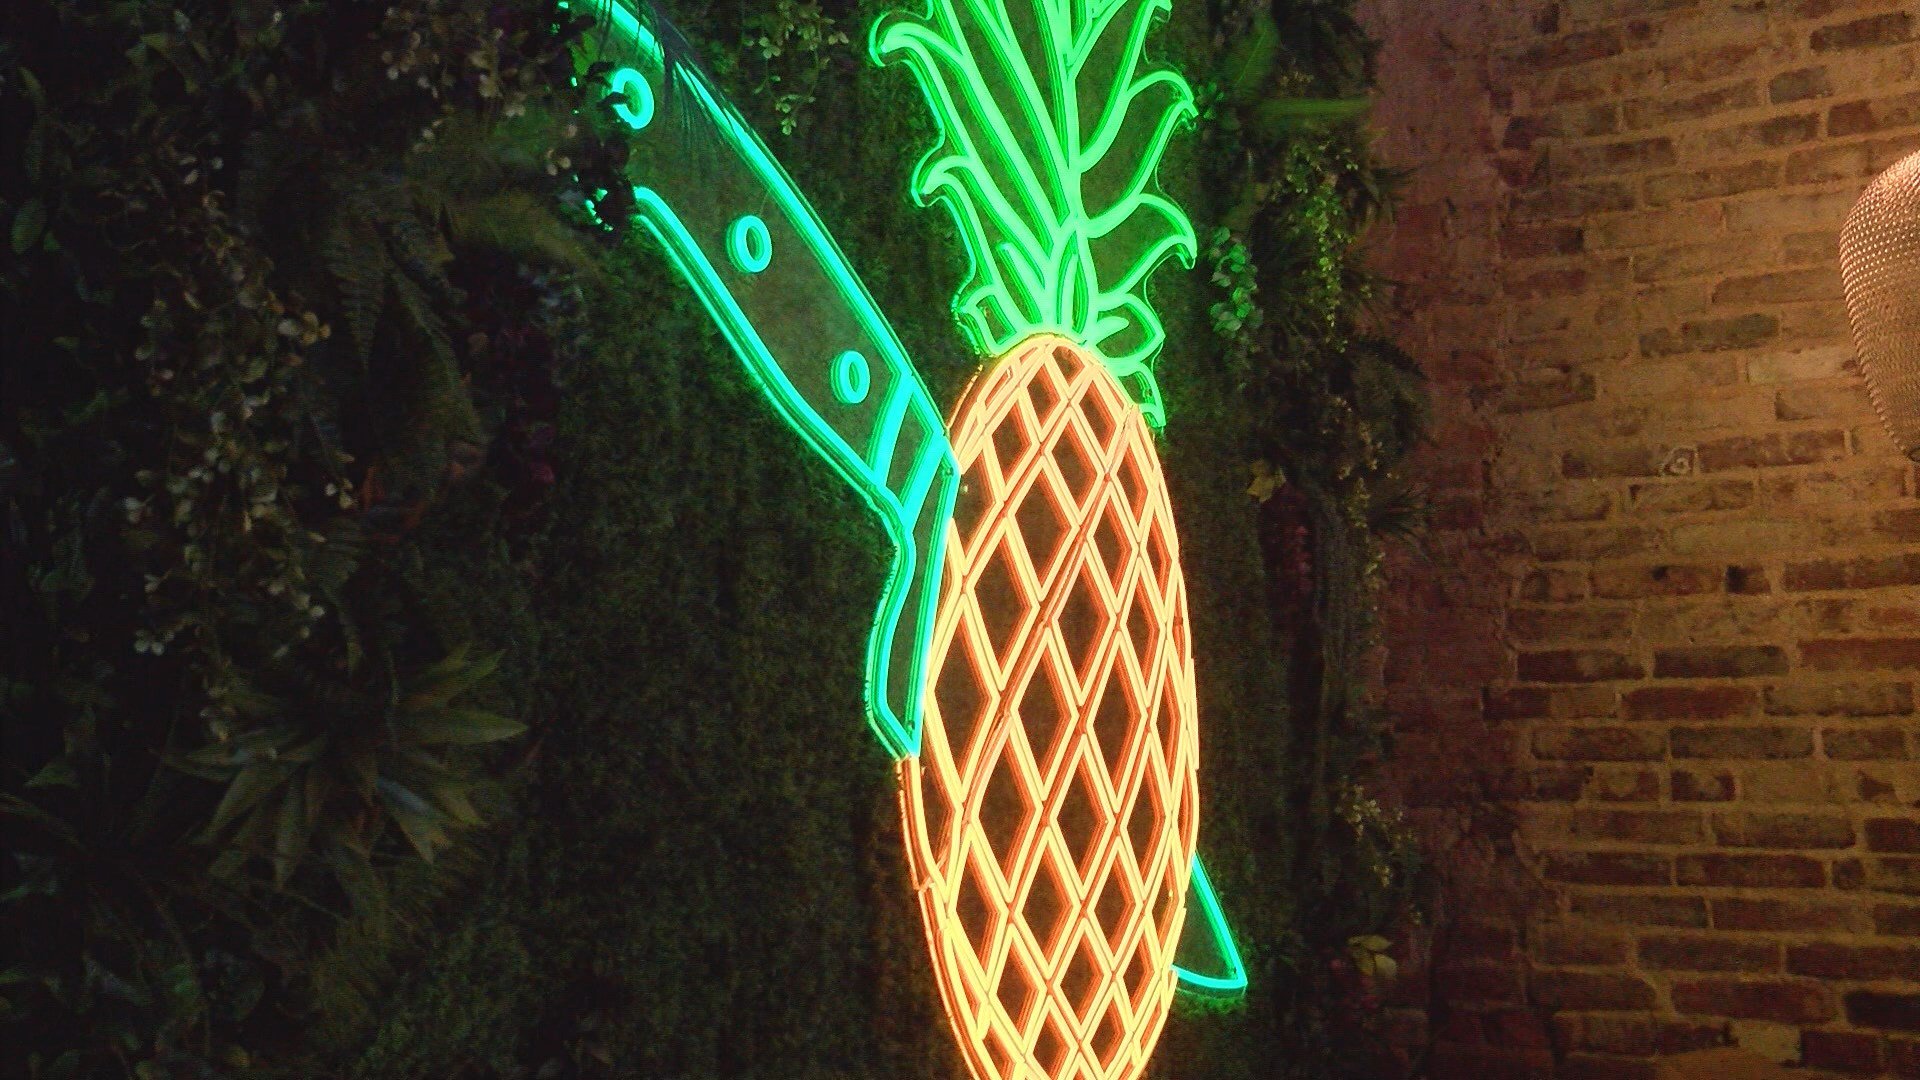 Pineapple Ink Tavern returns to the downtown Augusta restaurant scene